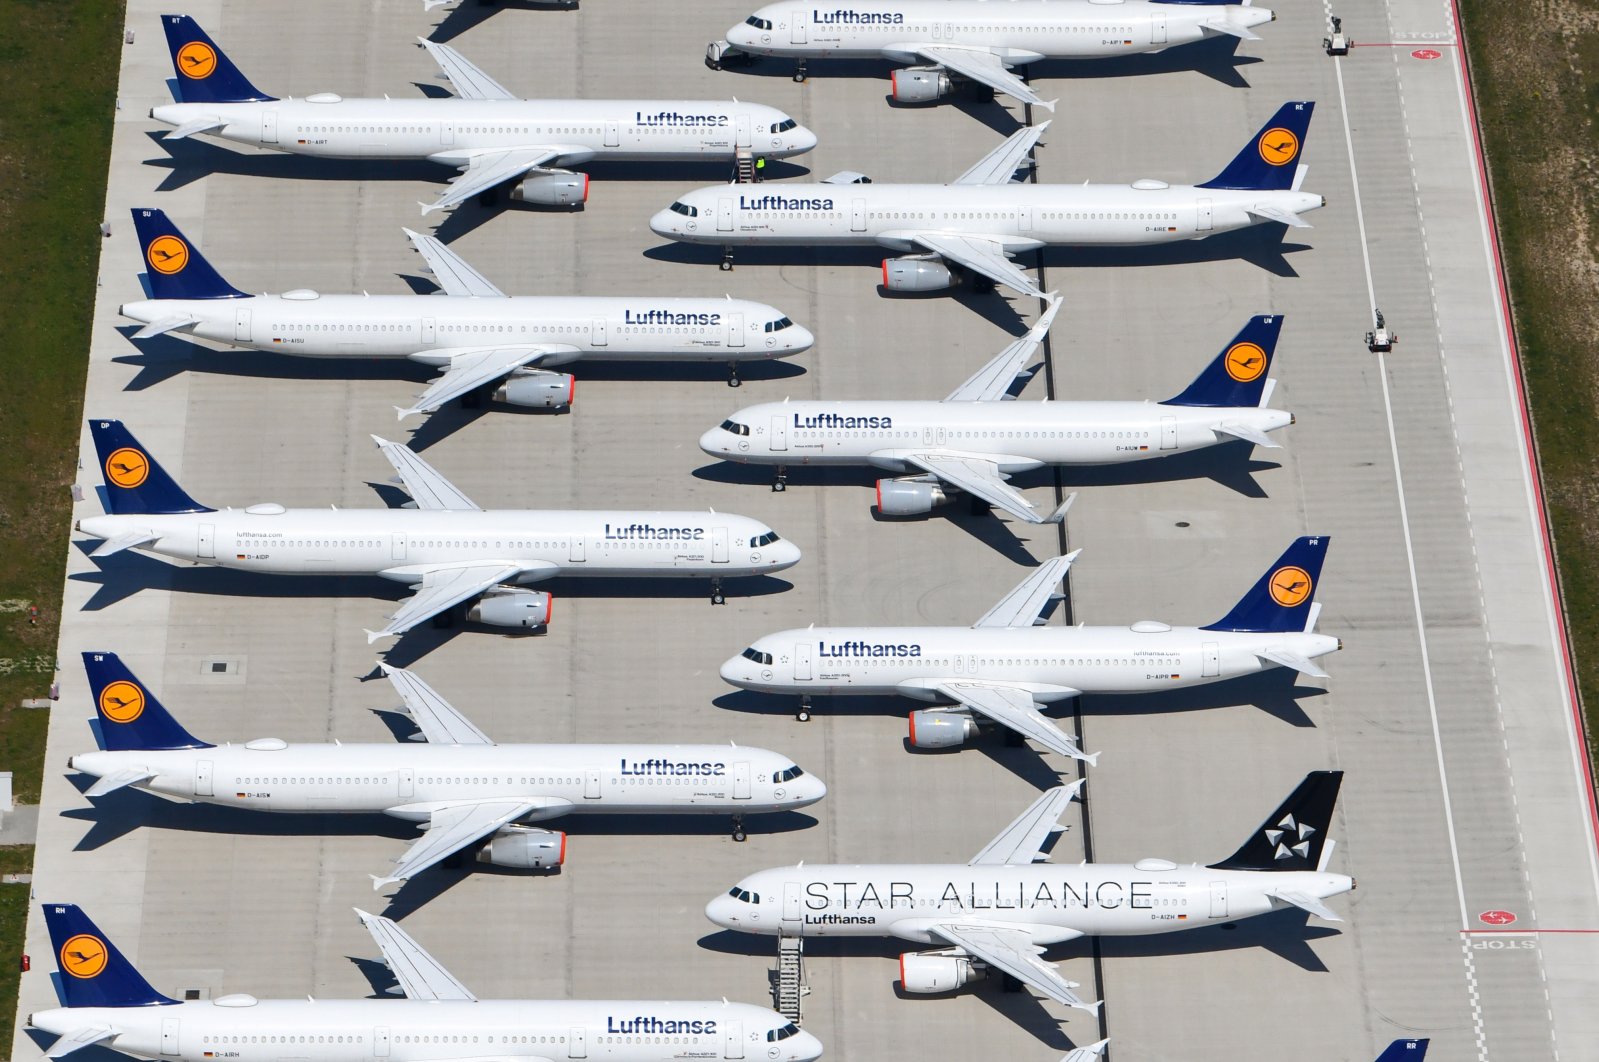 Lufthansa planes sit on the tarmac at the Berlin Brandenburg International Airport in Schoenefeld, Germany, April 23, 2020. (EPA Photo)